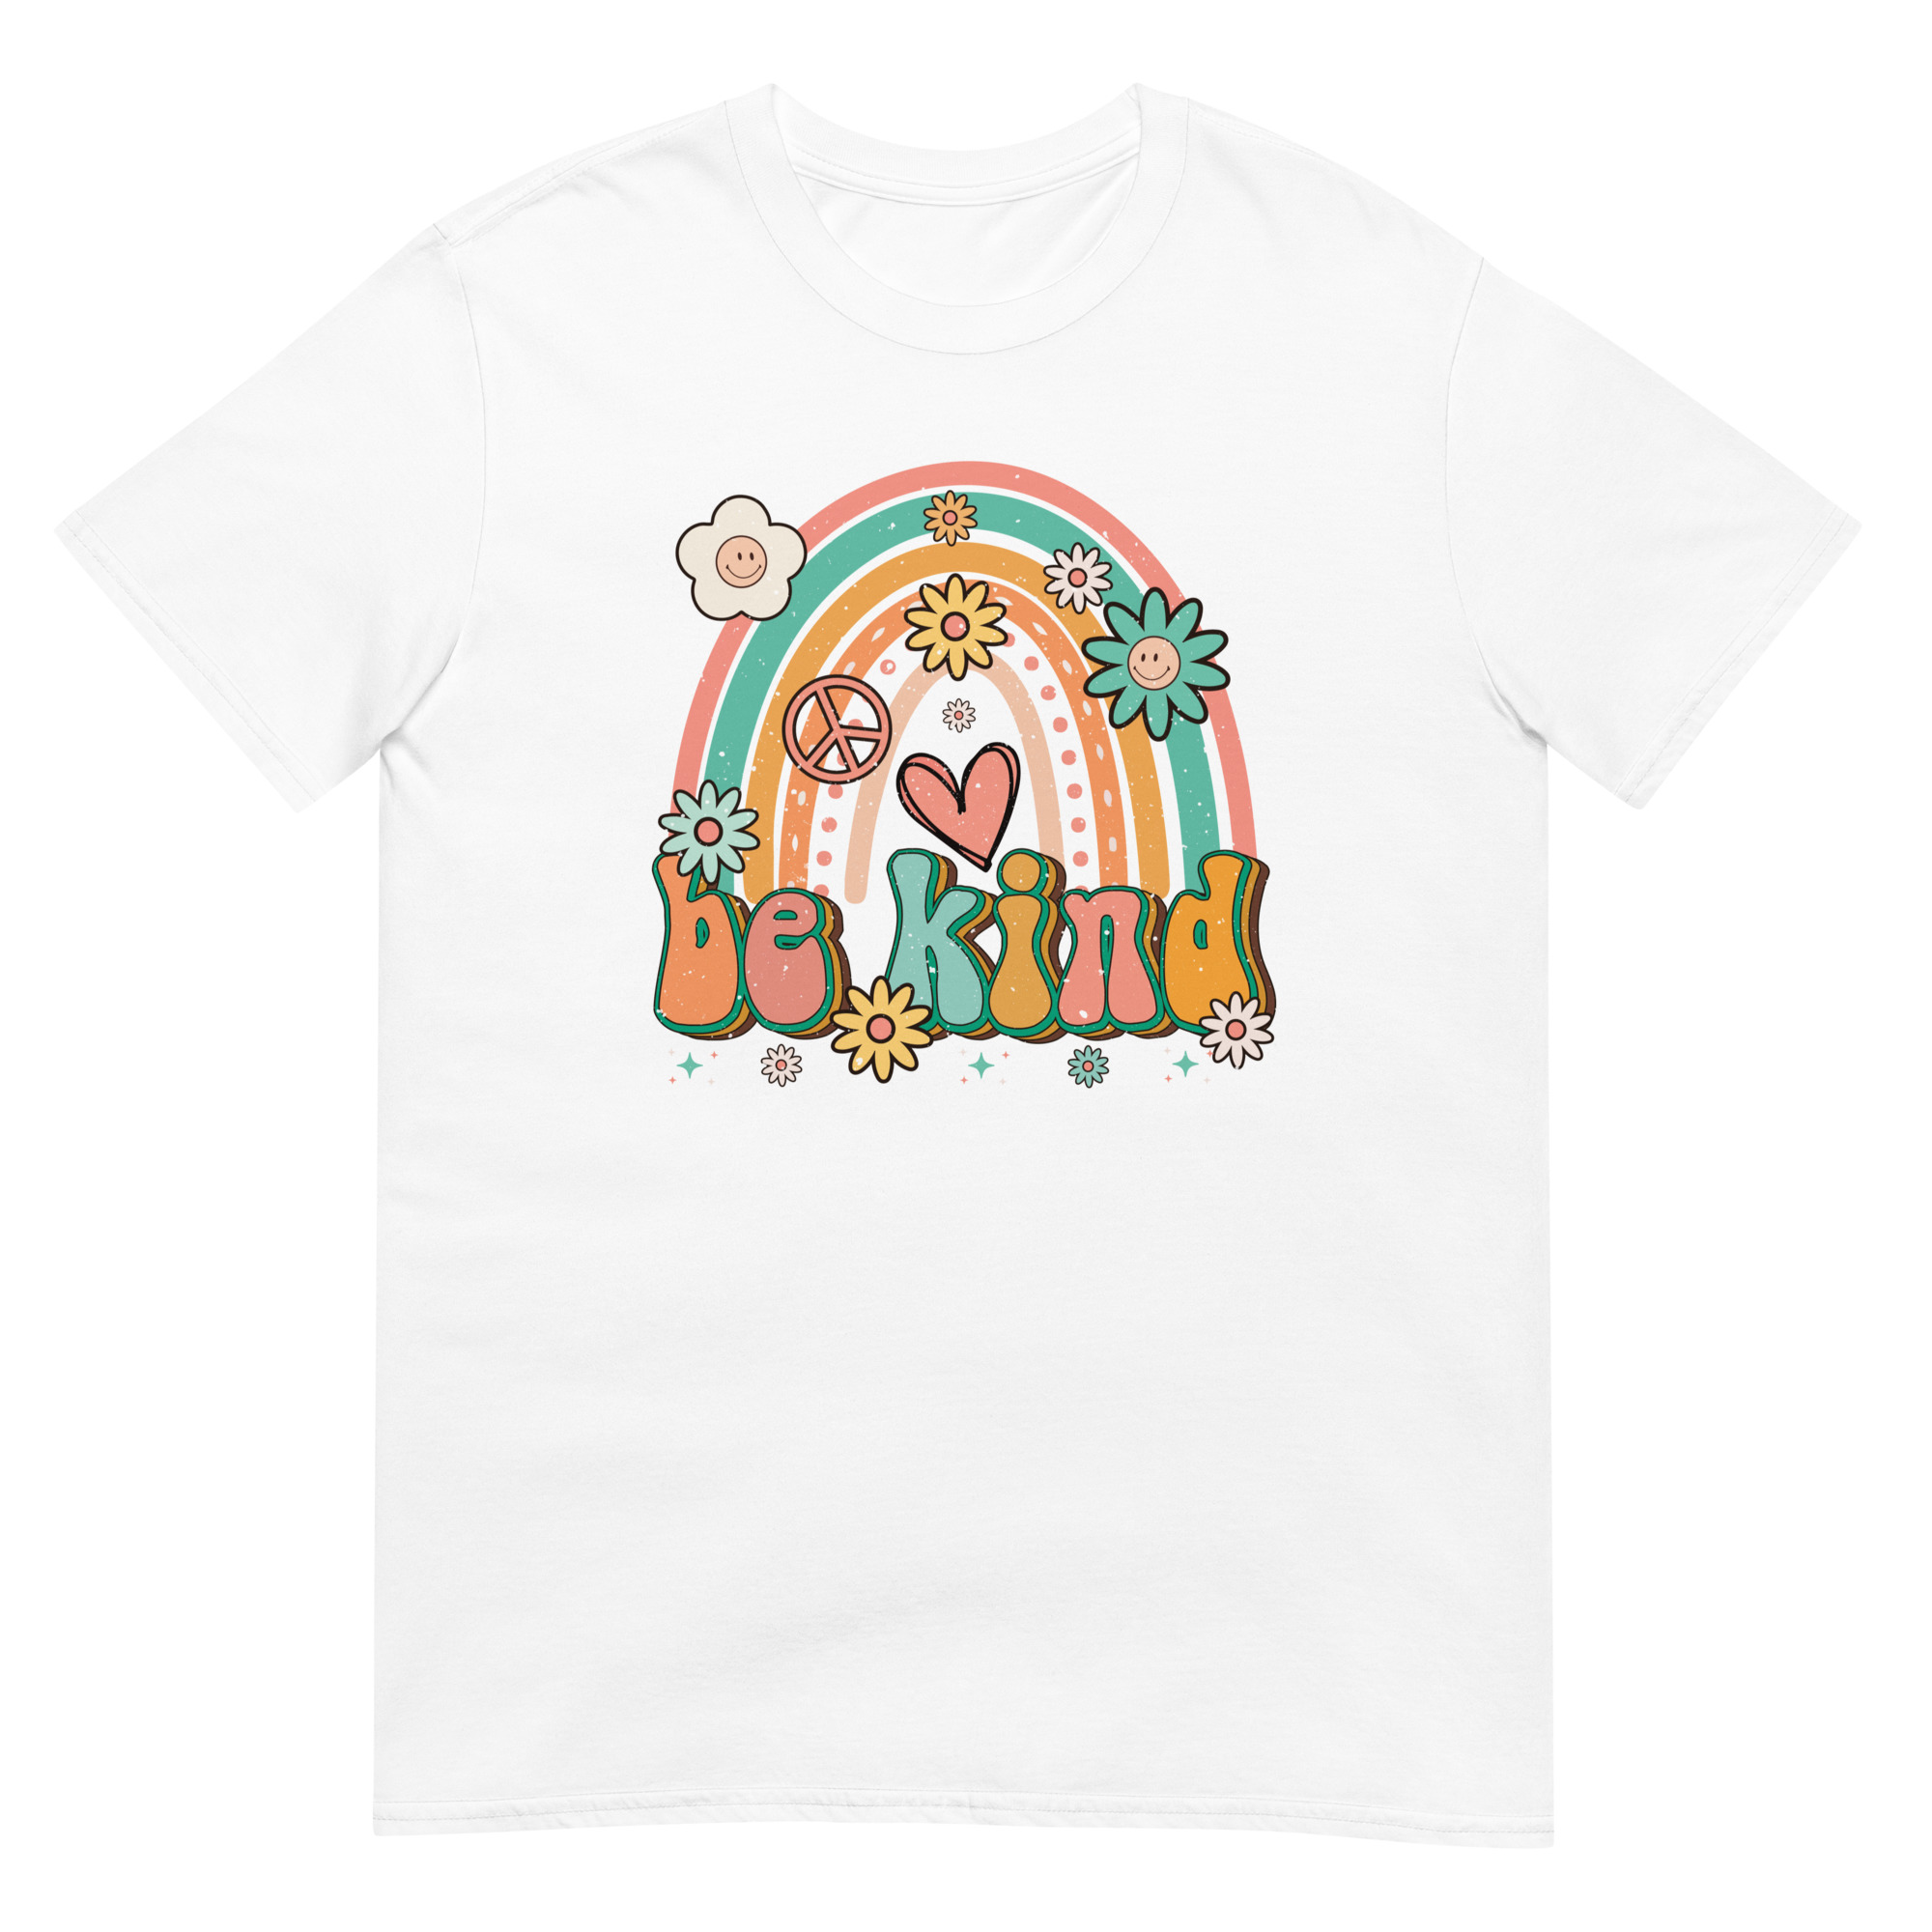 Be Kind Rainbow - Unisex Motivational Quote T-Shirt